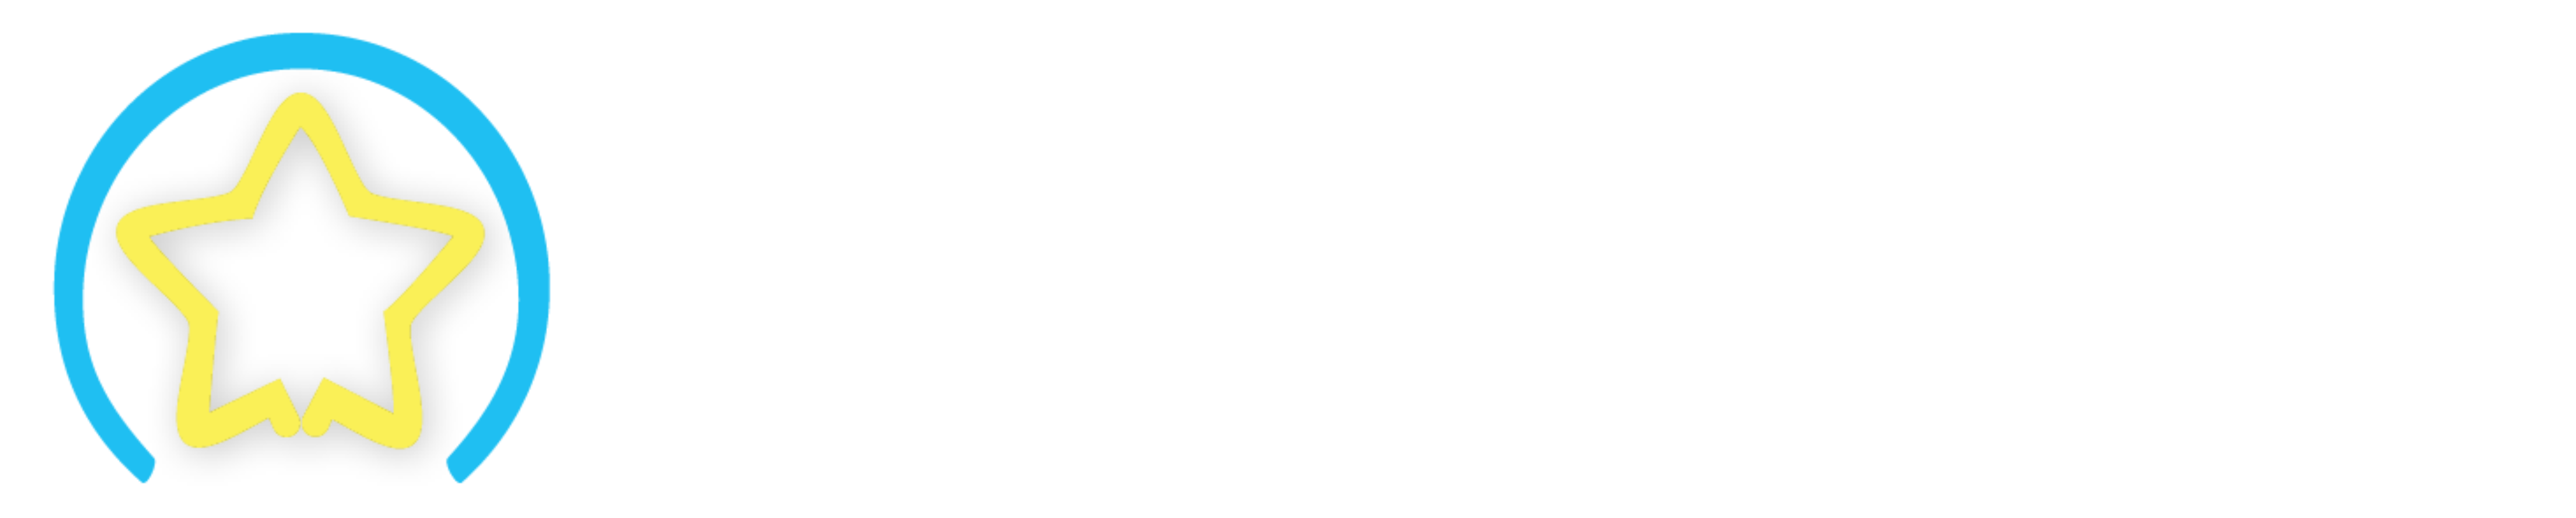 The Acadia Cinema Cooperative logo